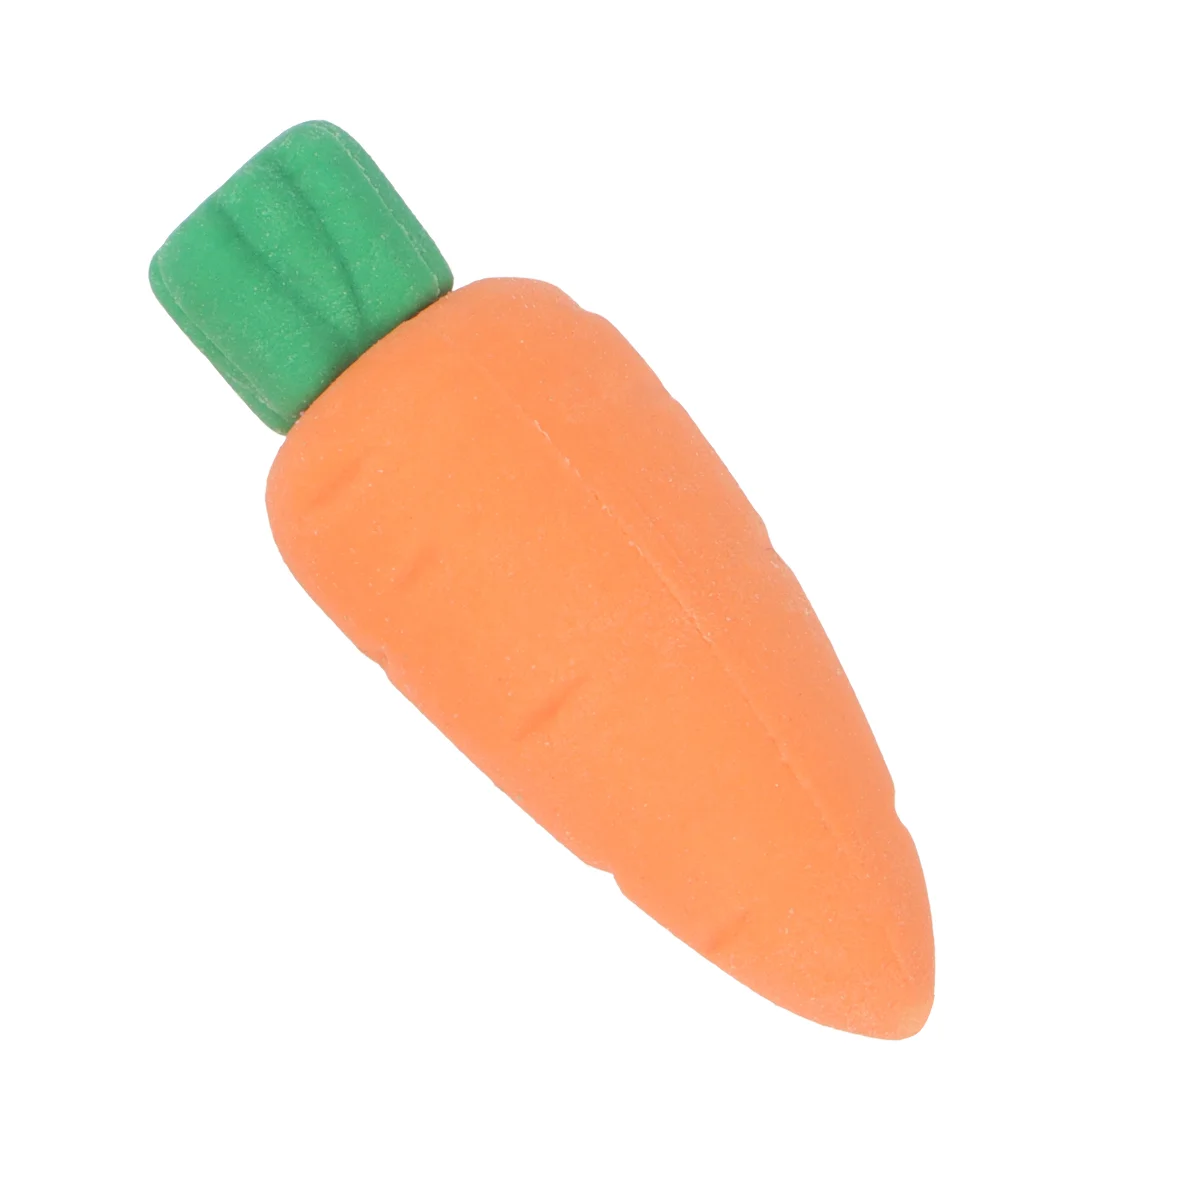 

30pcs Erasers Carrot Shape Rubber Cartoon Eraser Foods Miniature Eraser Novelty for Kids Party Favors Gifts